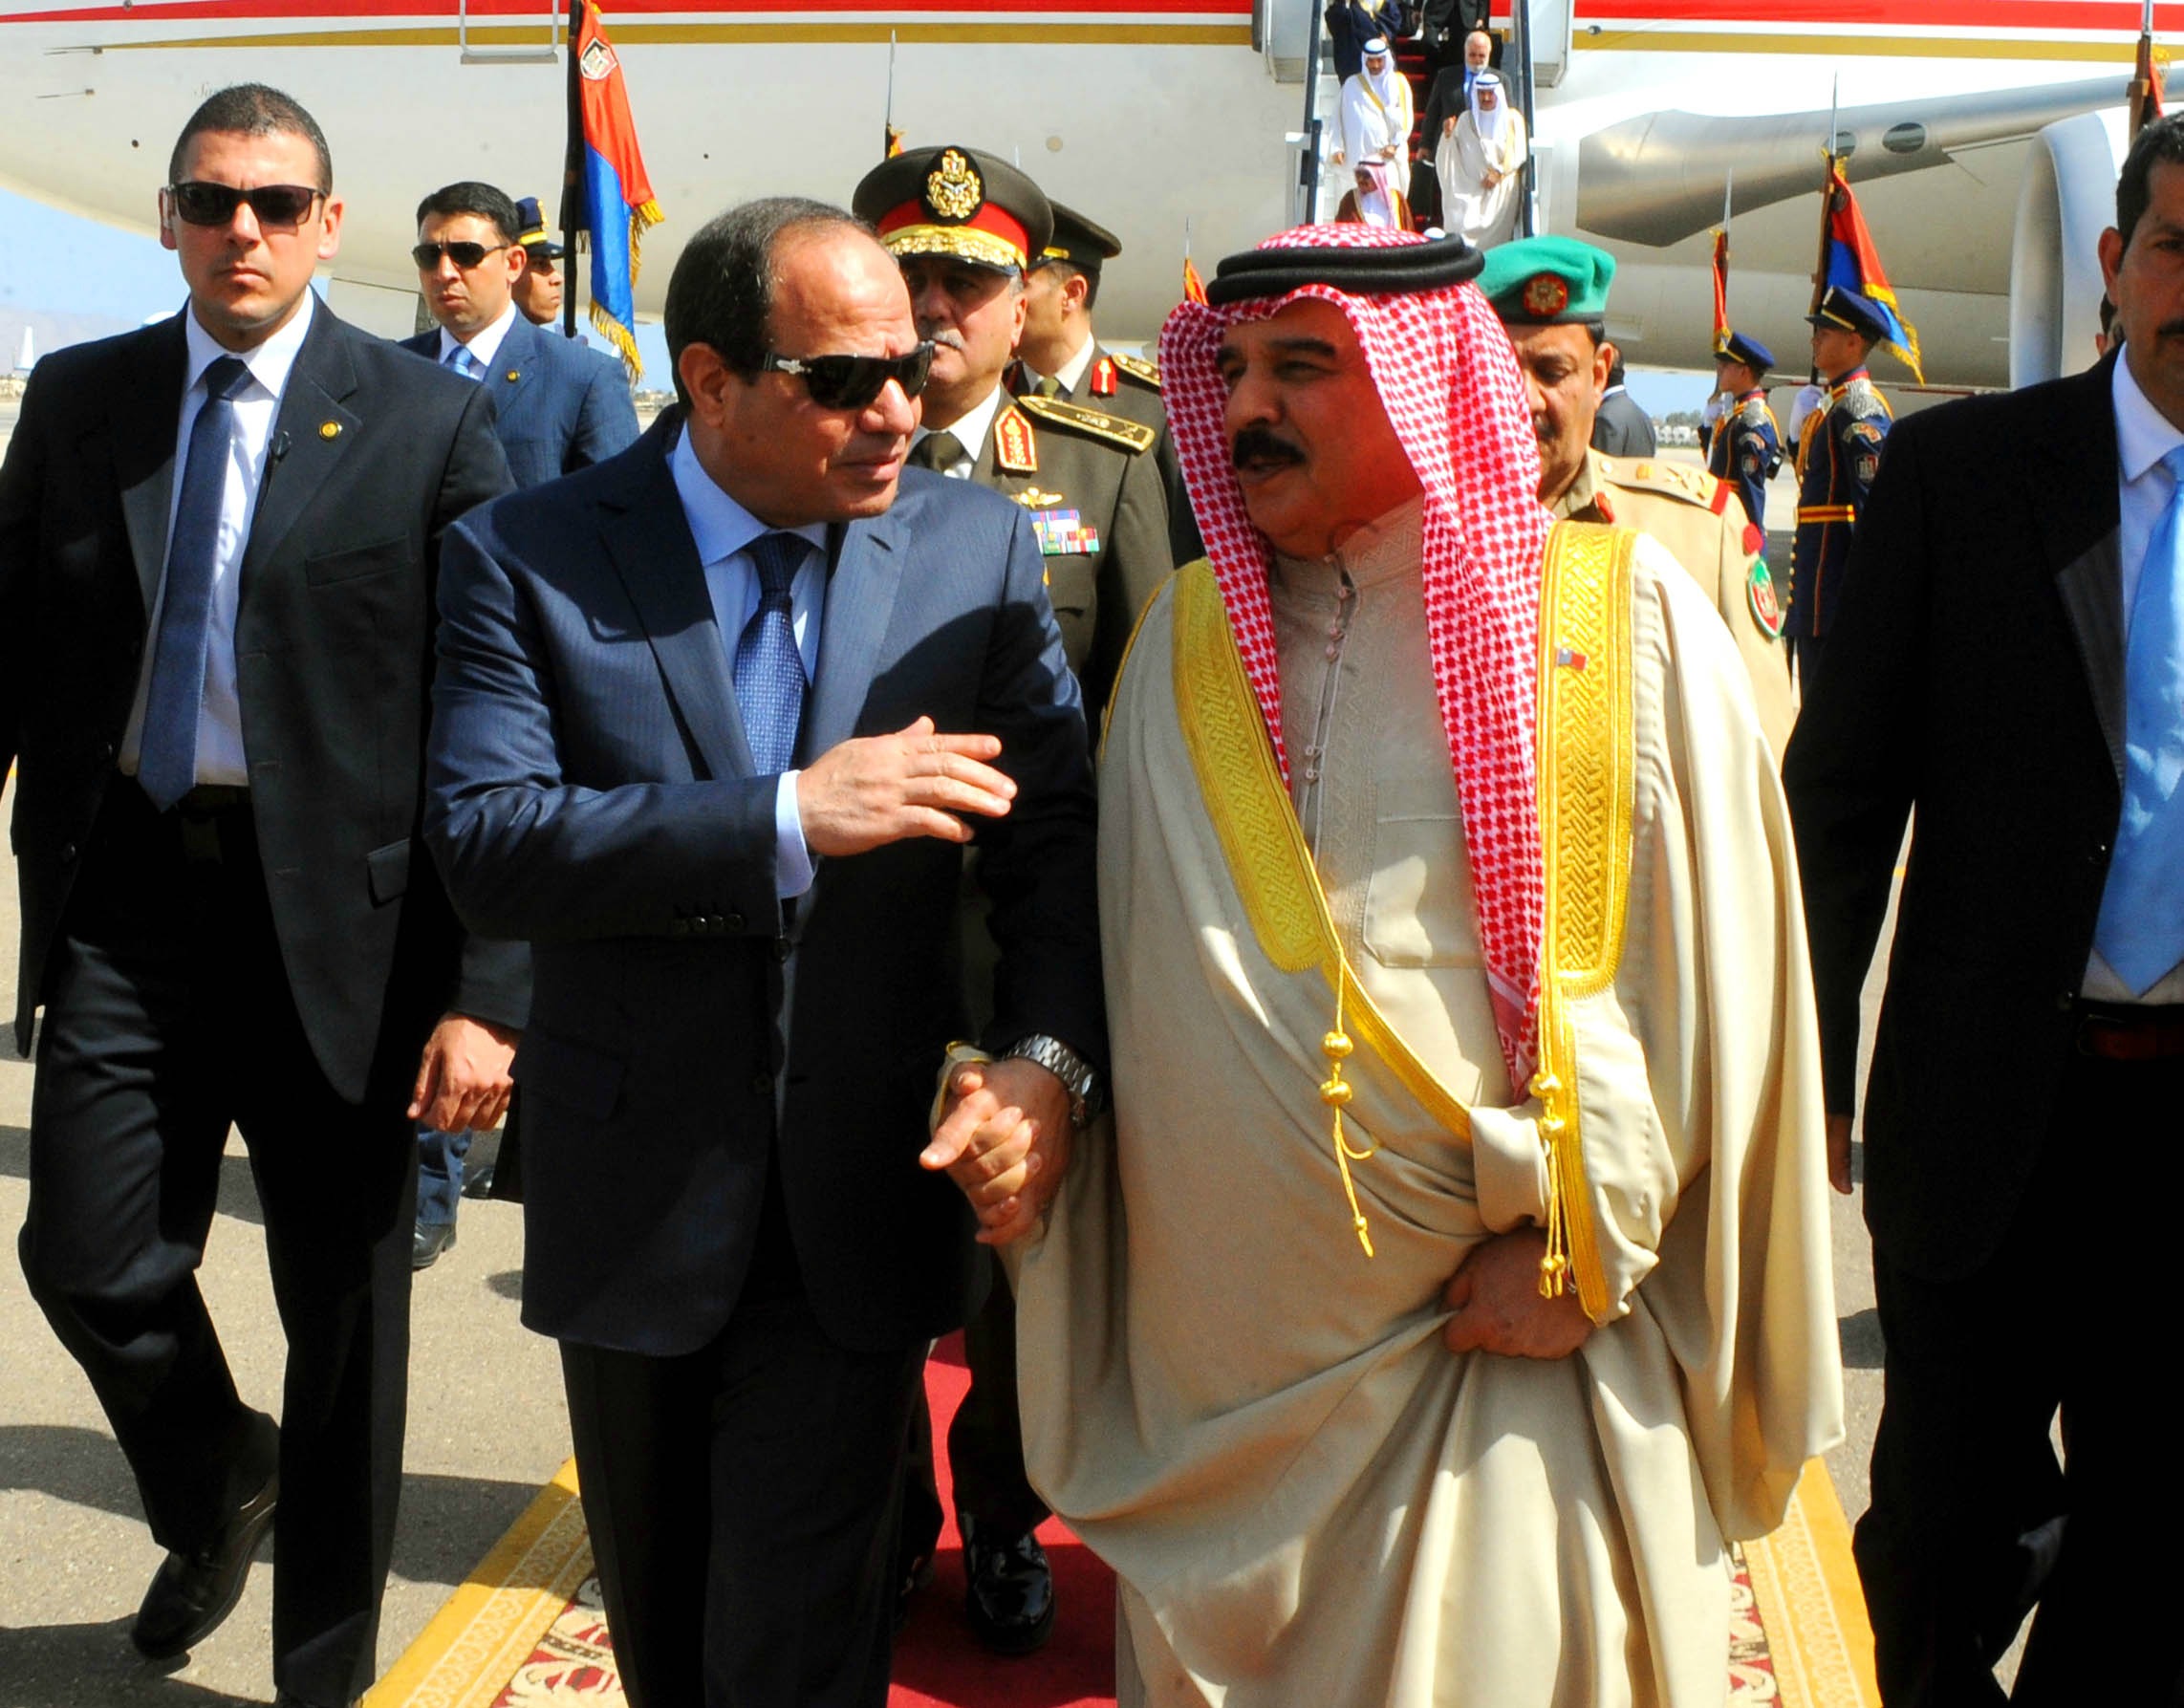 Egyptian President Abdelfatah Al-Sisi receives Bahrain's King Hamad bin Essa Al-Khalifa upon arriving at Sharm El Sheikh, to attend the 26th Arab Summit